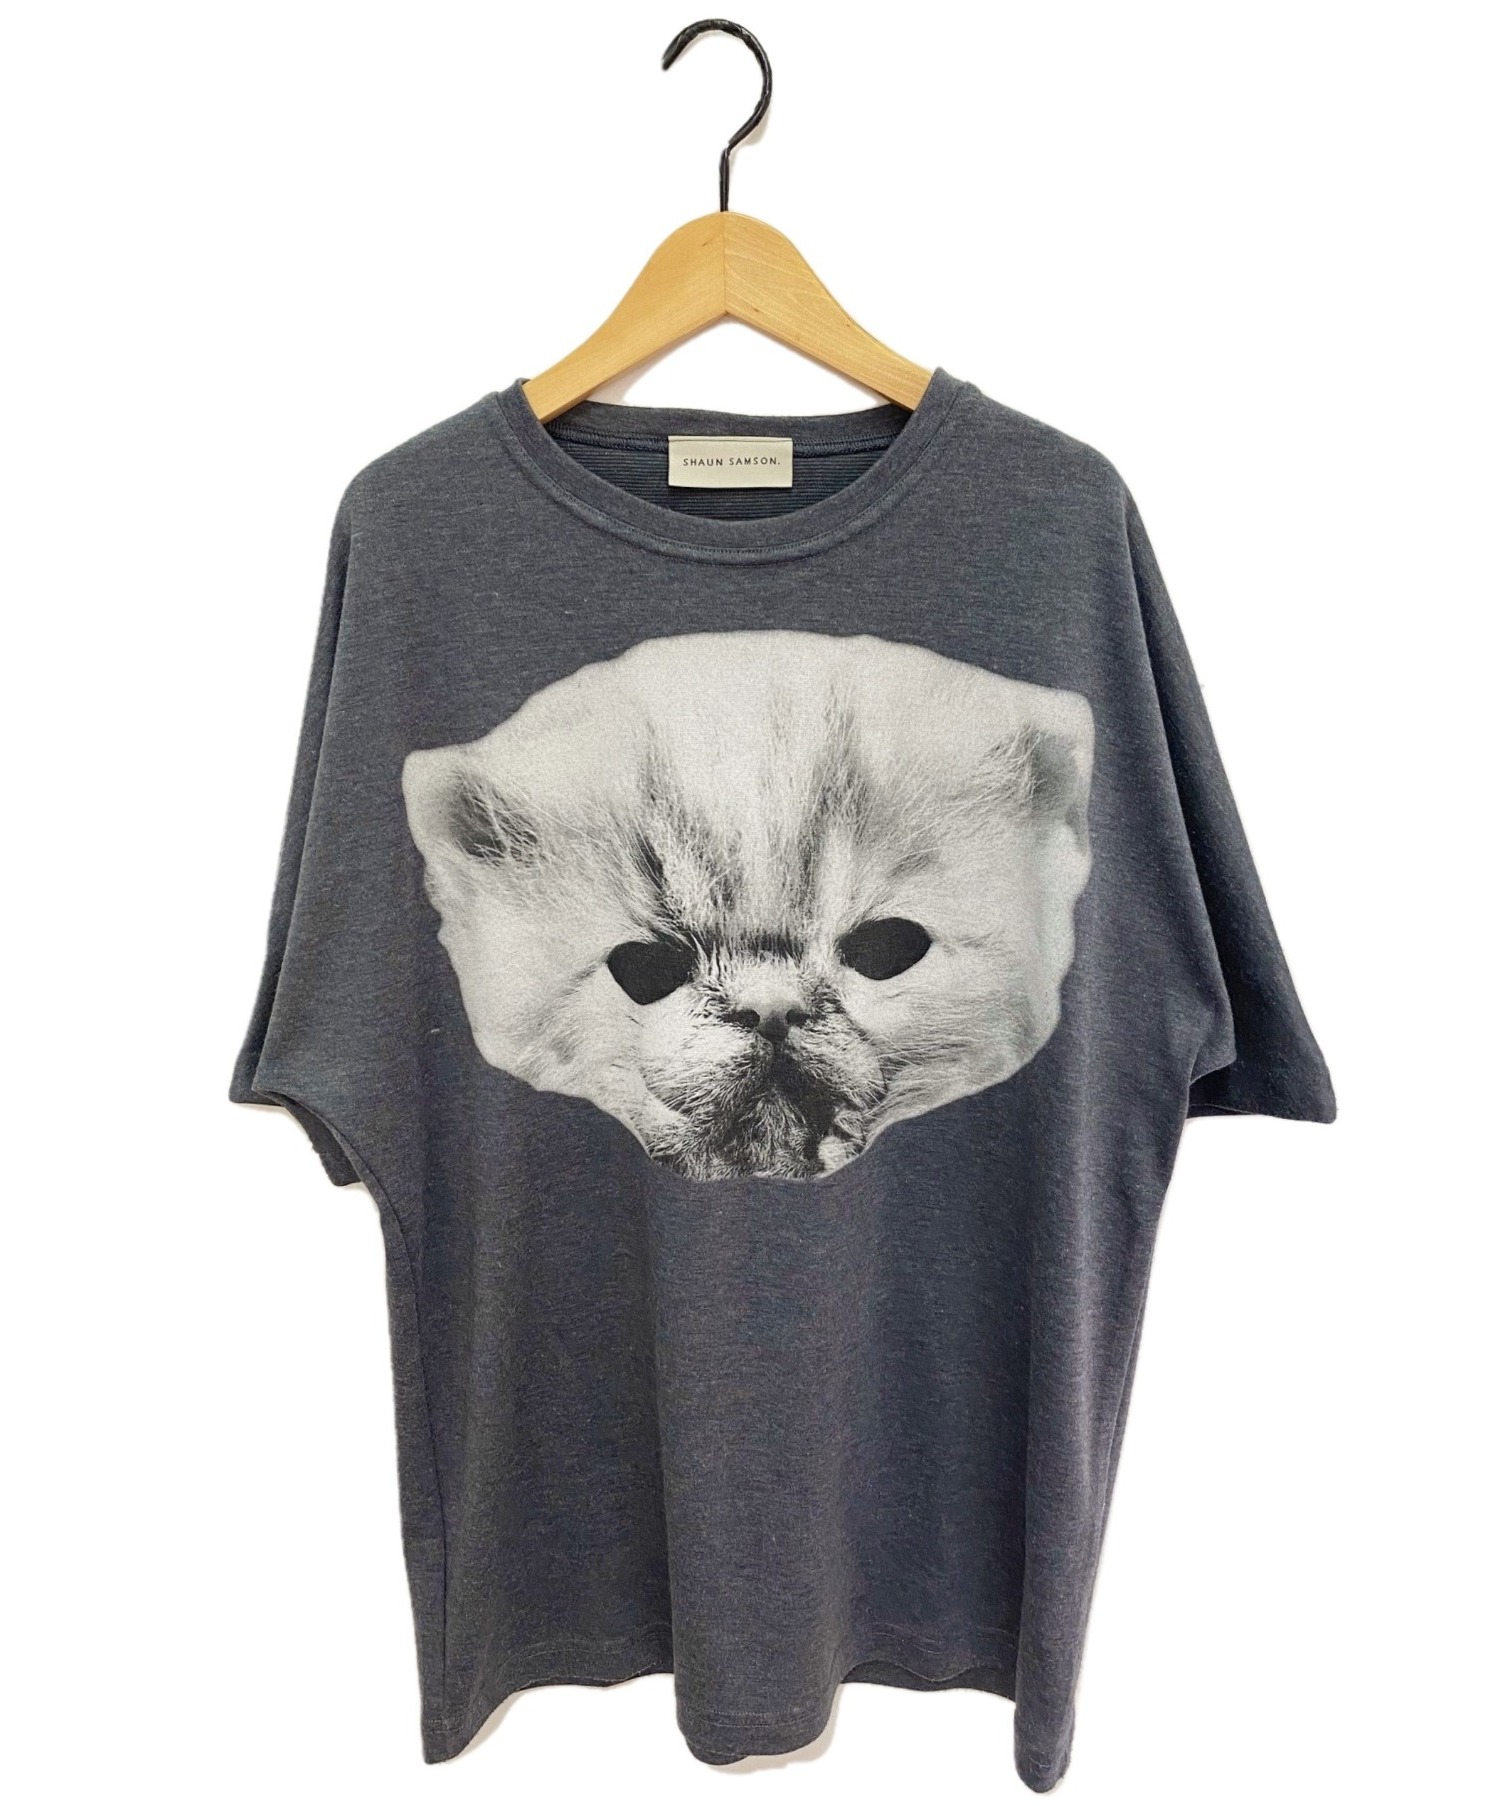 SHAUN SAMSON Tシャツ 猫 ネコ